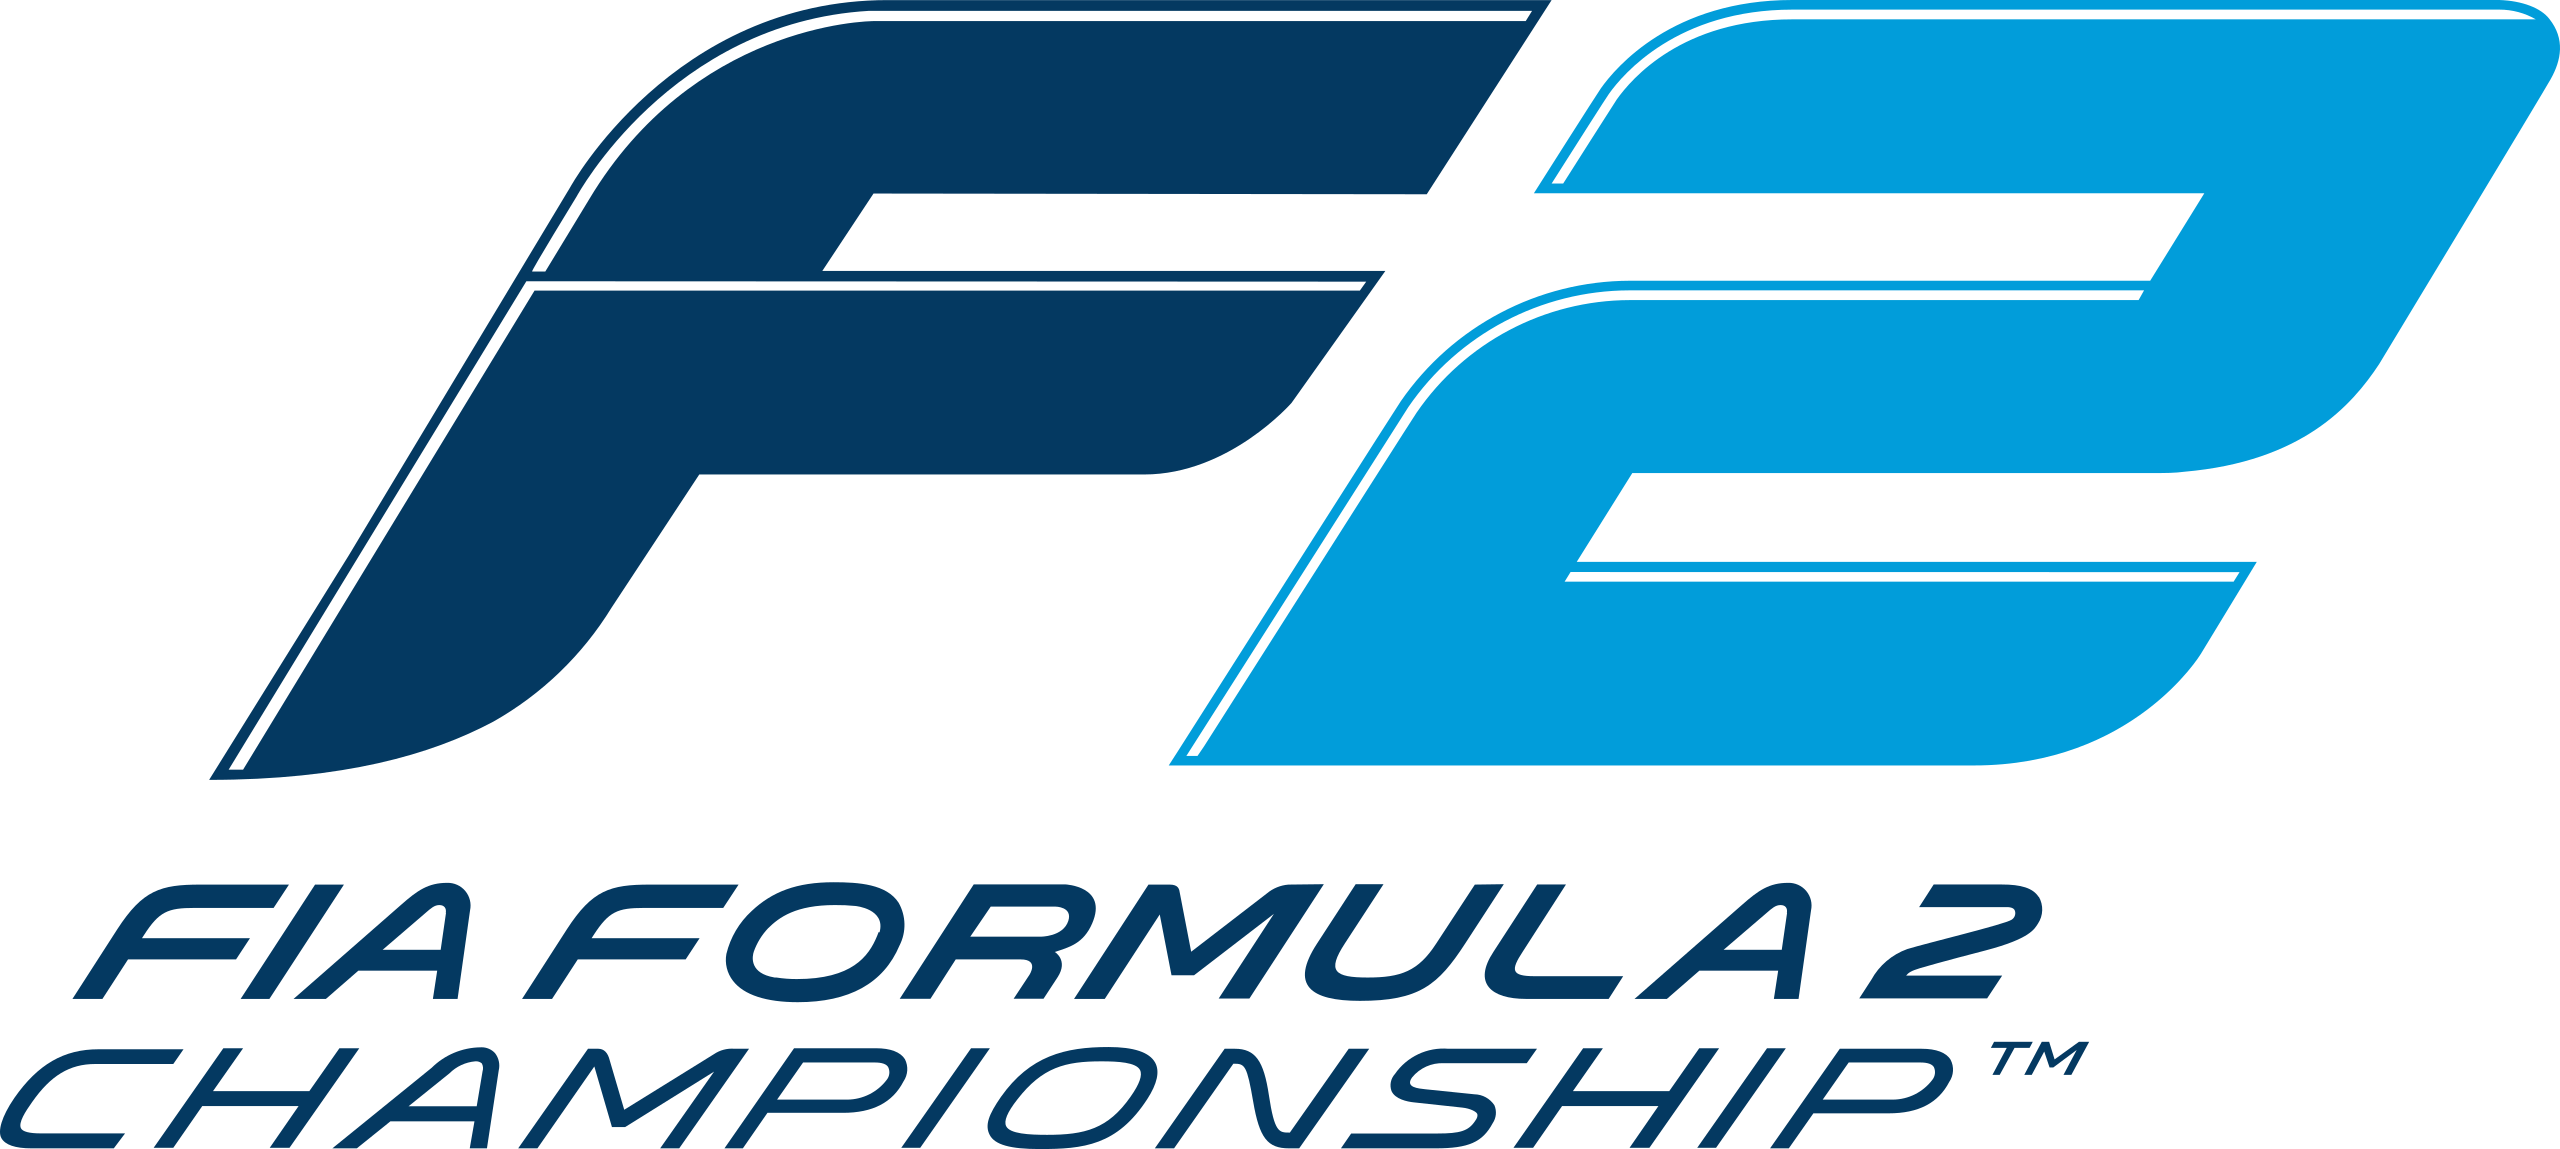 Formule2 2022 GP10 Hongarije Kwalificatie DUTCH 720p WEB-DL AAC2 0 x264-UGDV